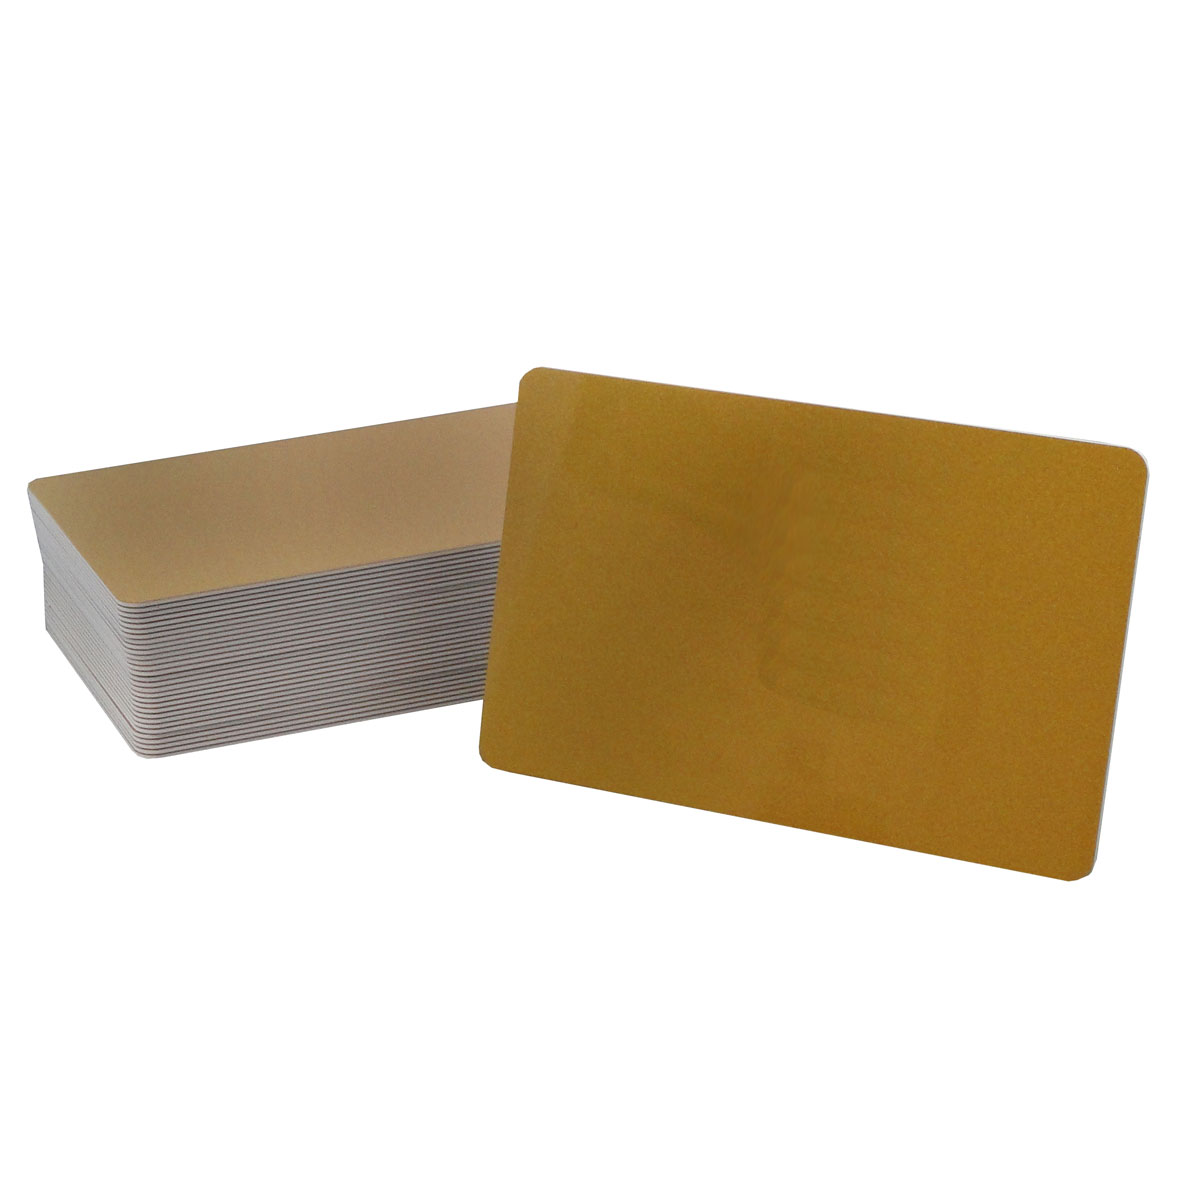 Blanko Plastikkarten - gold, unbedruckt